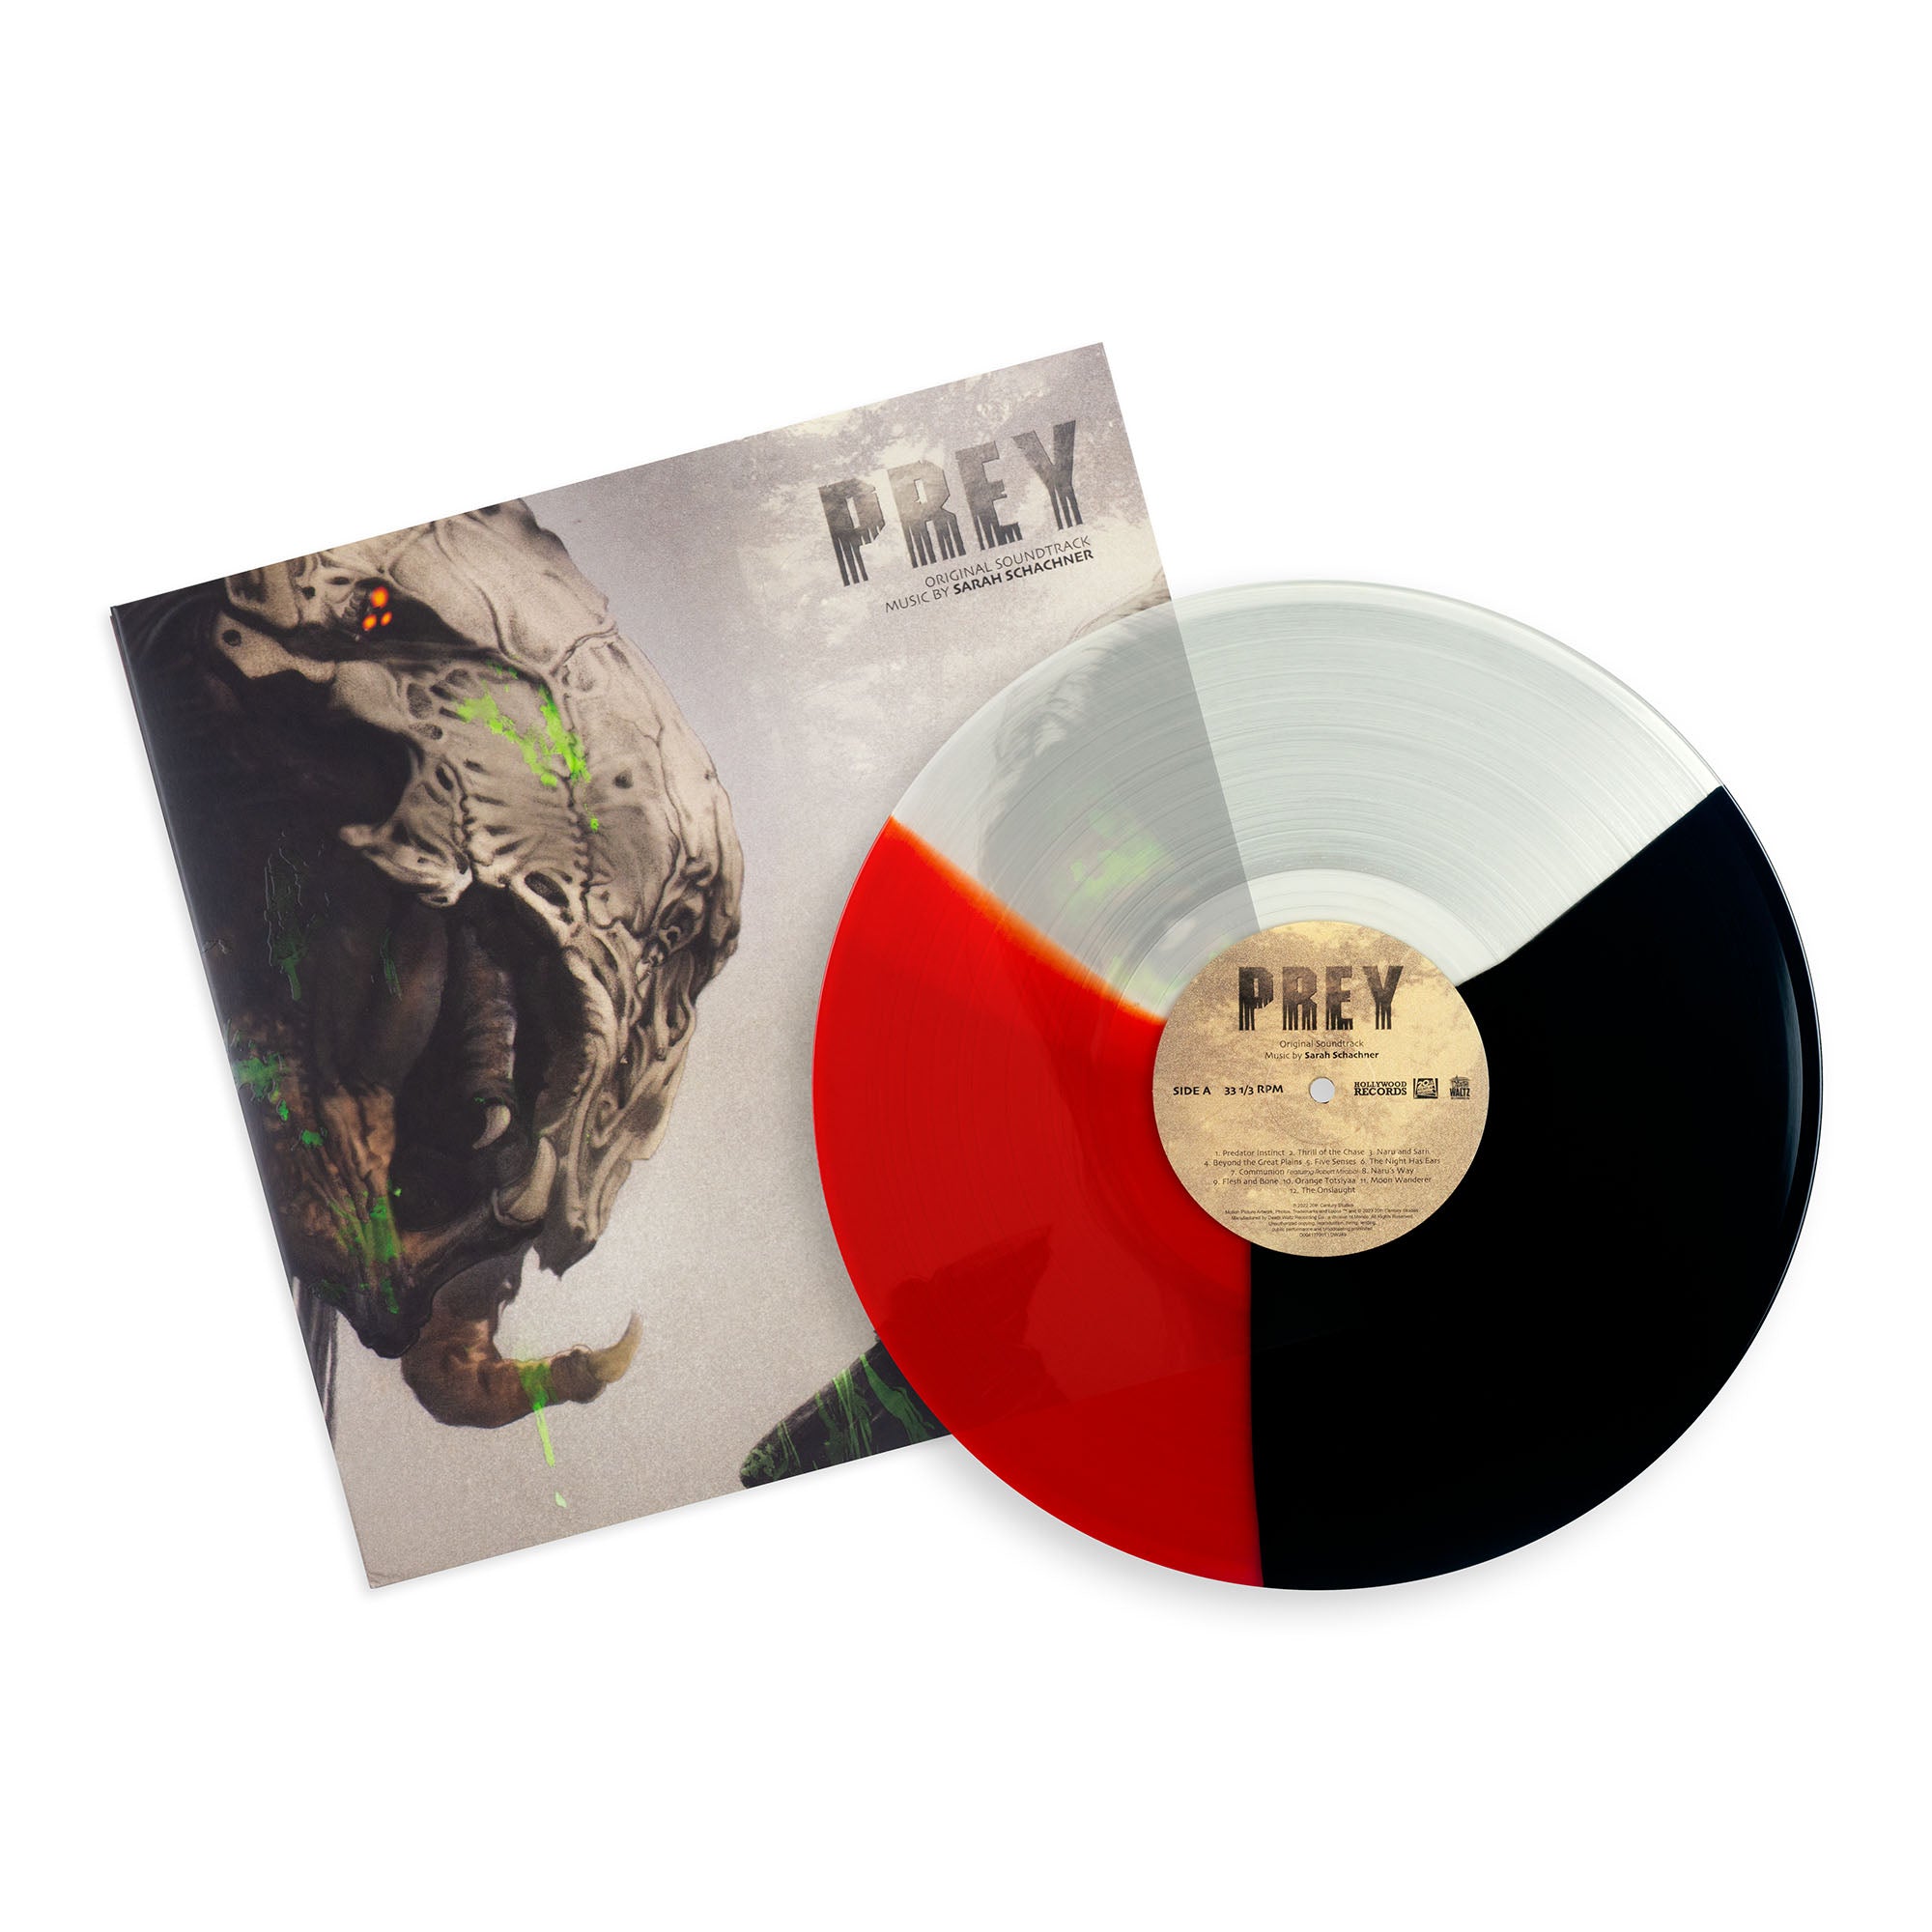 Various ‎– Birds Of Prey (The Album) - New LP Record 2020 Atlantic USA  Picture Disc Vinyl - Soundtrack